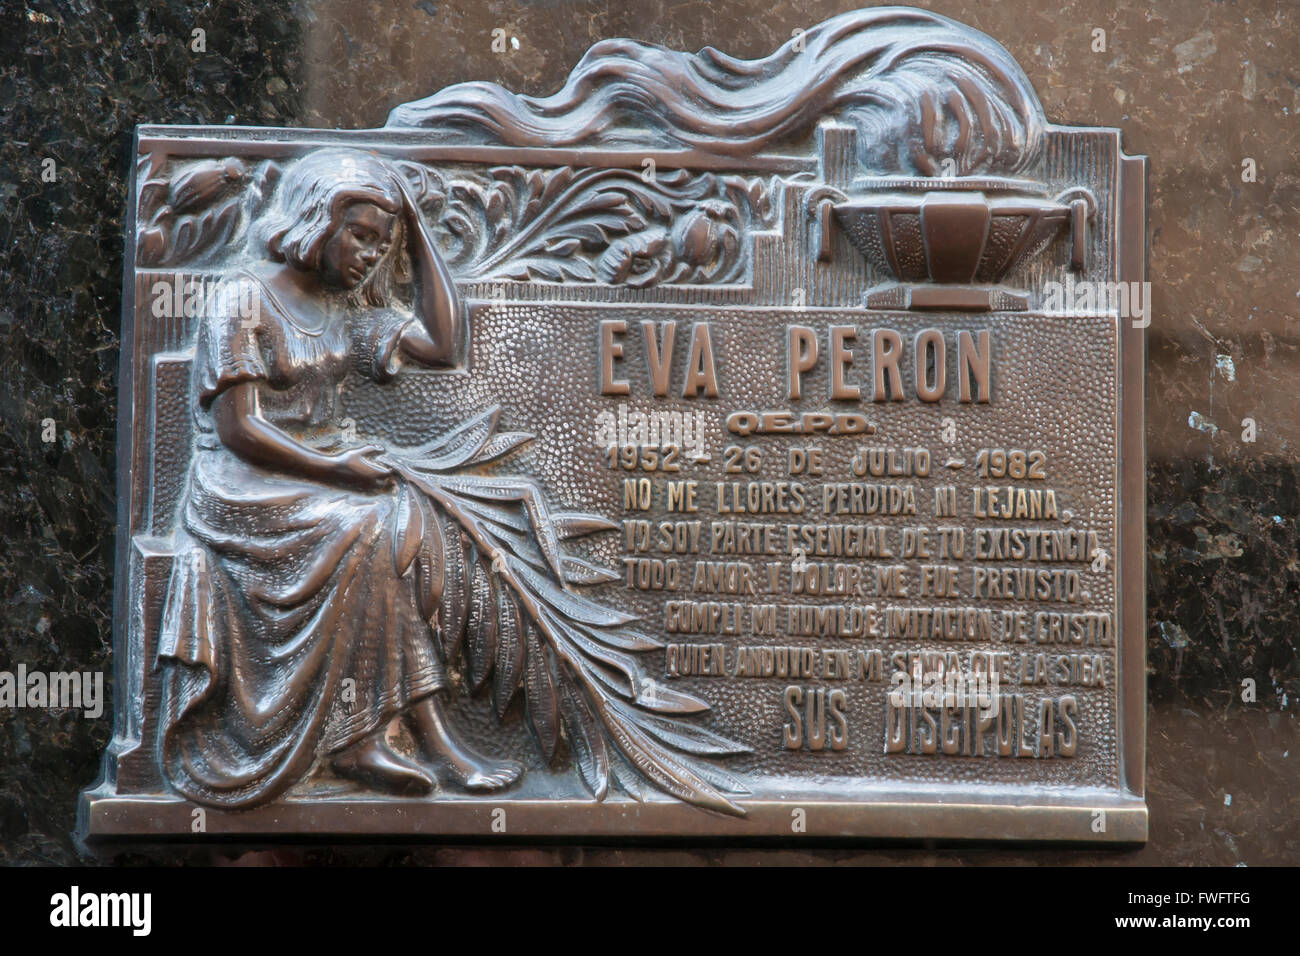 Eva Peron Grave Plaque - Buenos Aires - Argentina Stock Photo